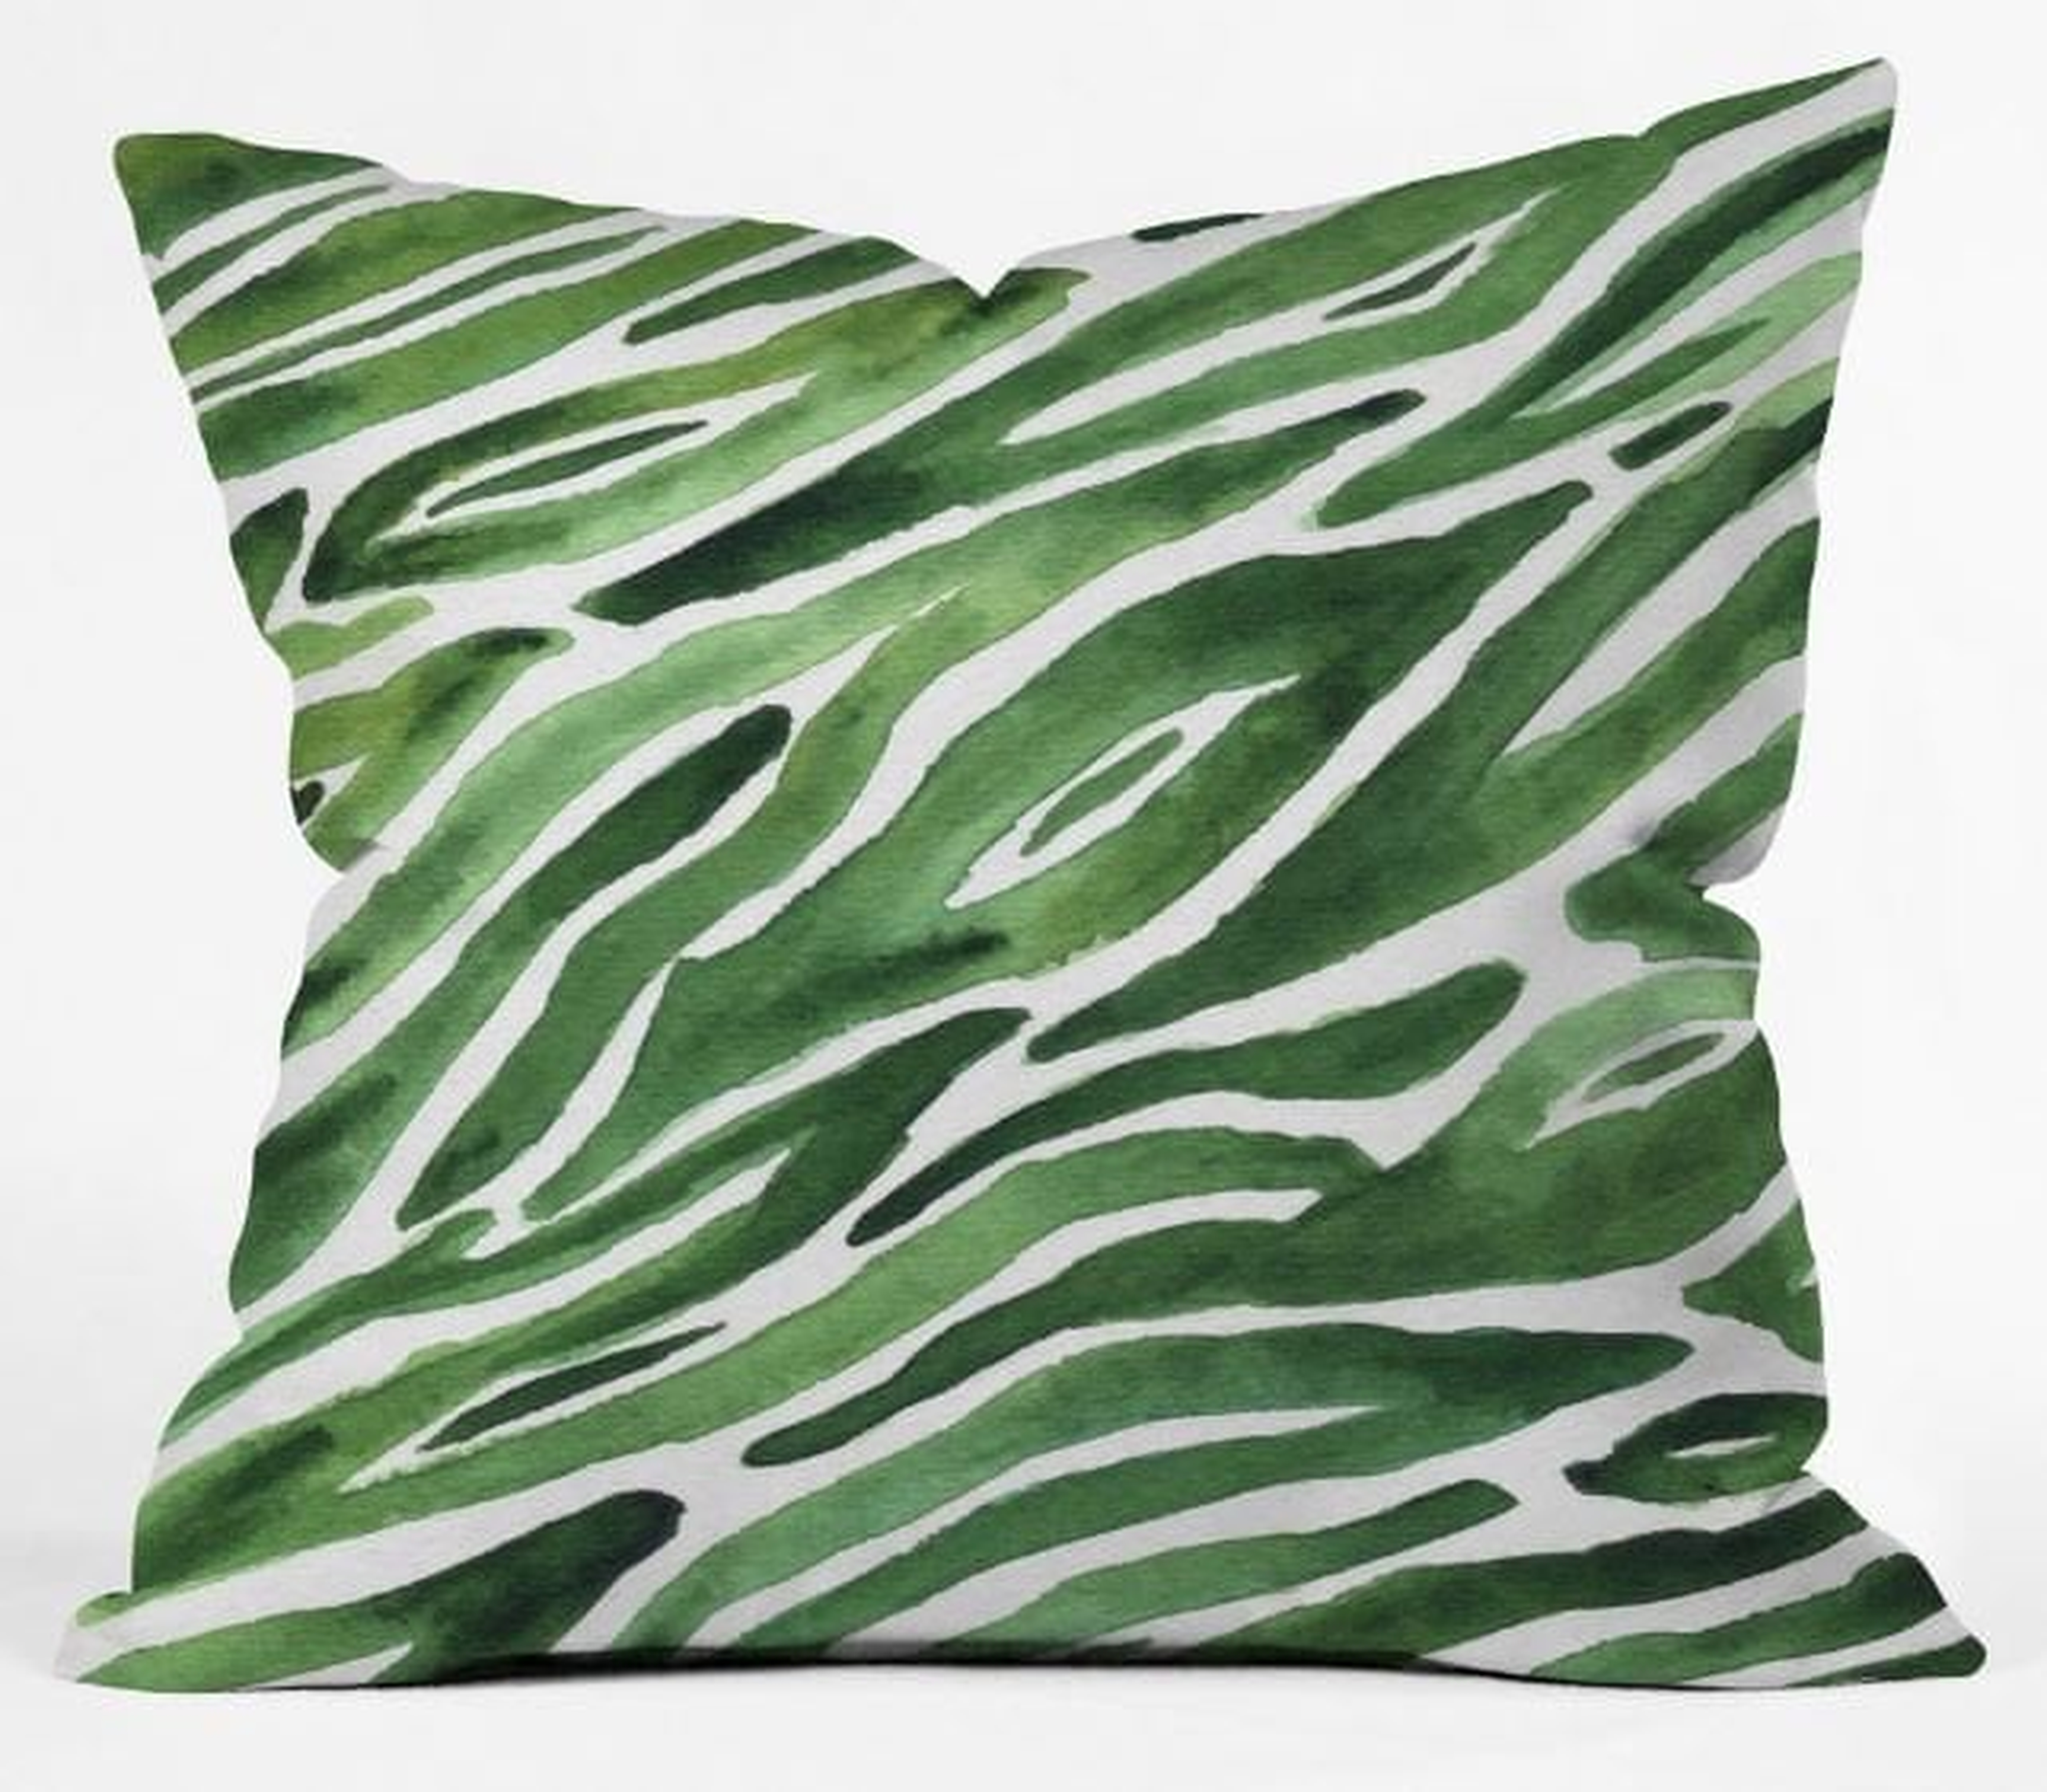 Green Flow Throw Pillow 20x20 with insert - Wander Print Co.